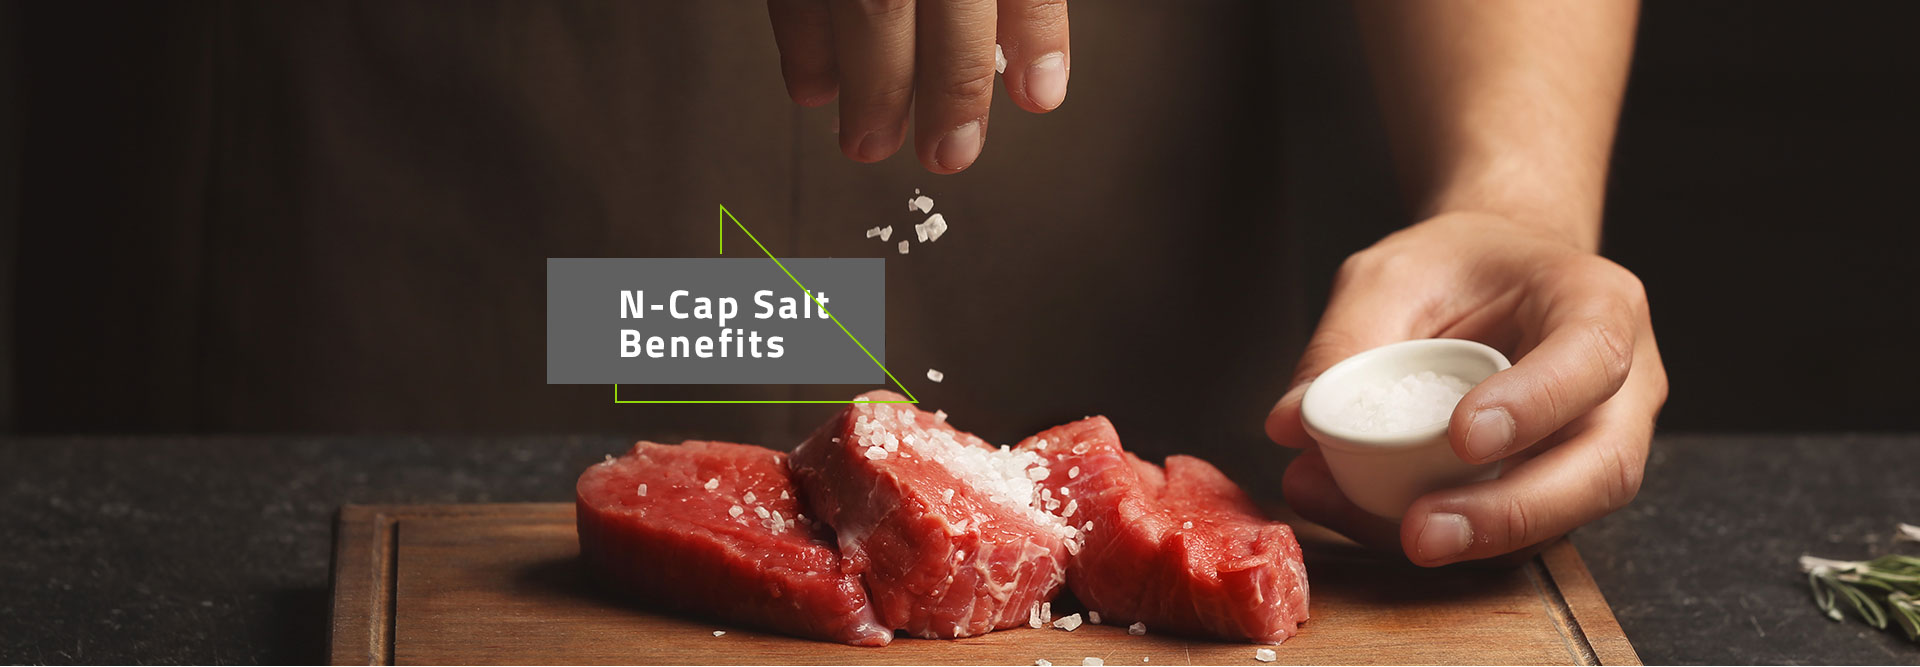 Nutrity-Page-Technology-N-Cap-Salt